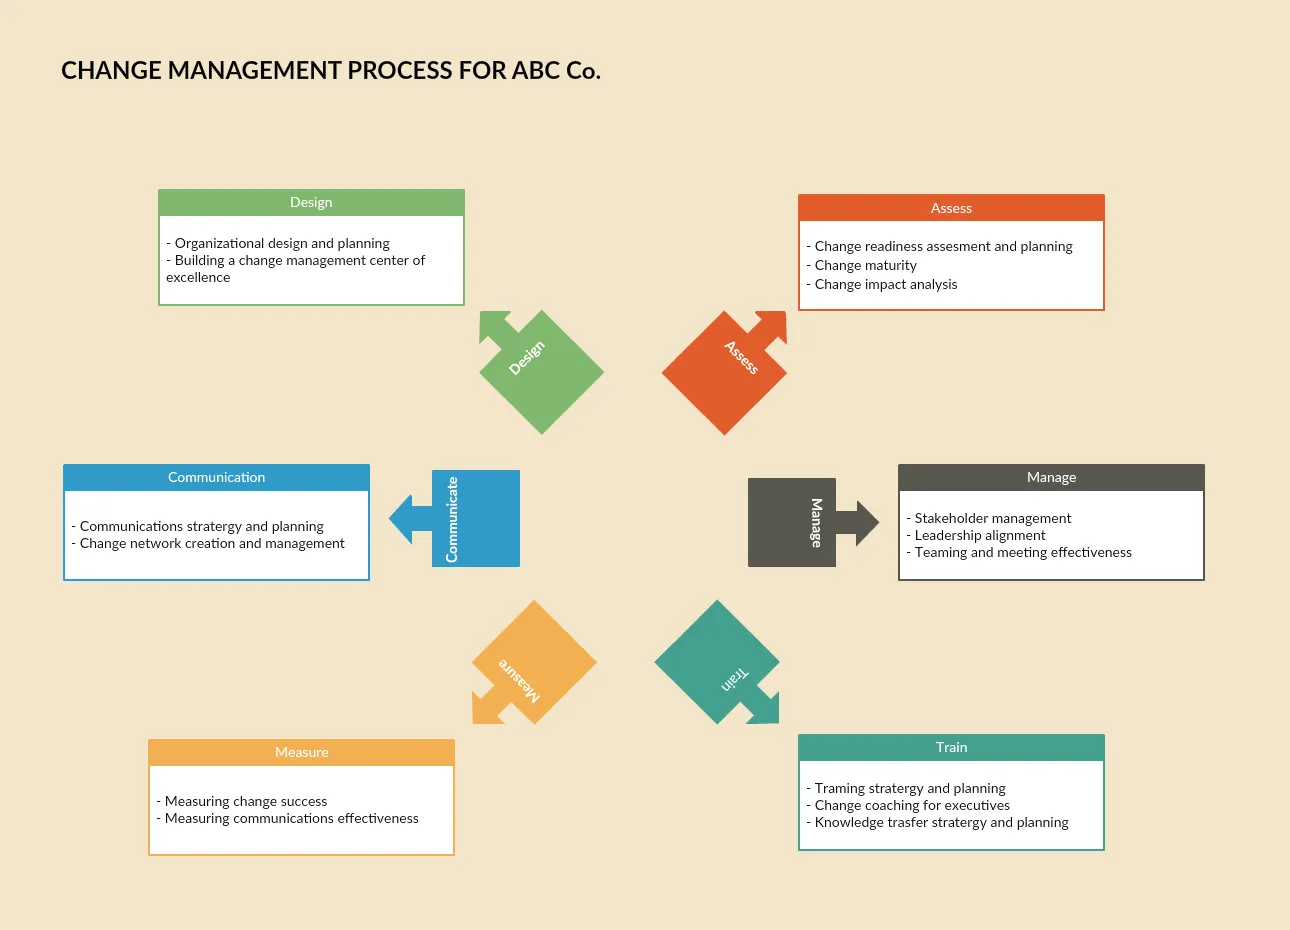 Change Management Impact Matrix [Free download]